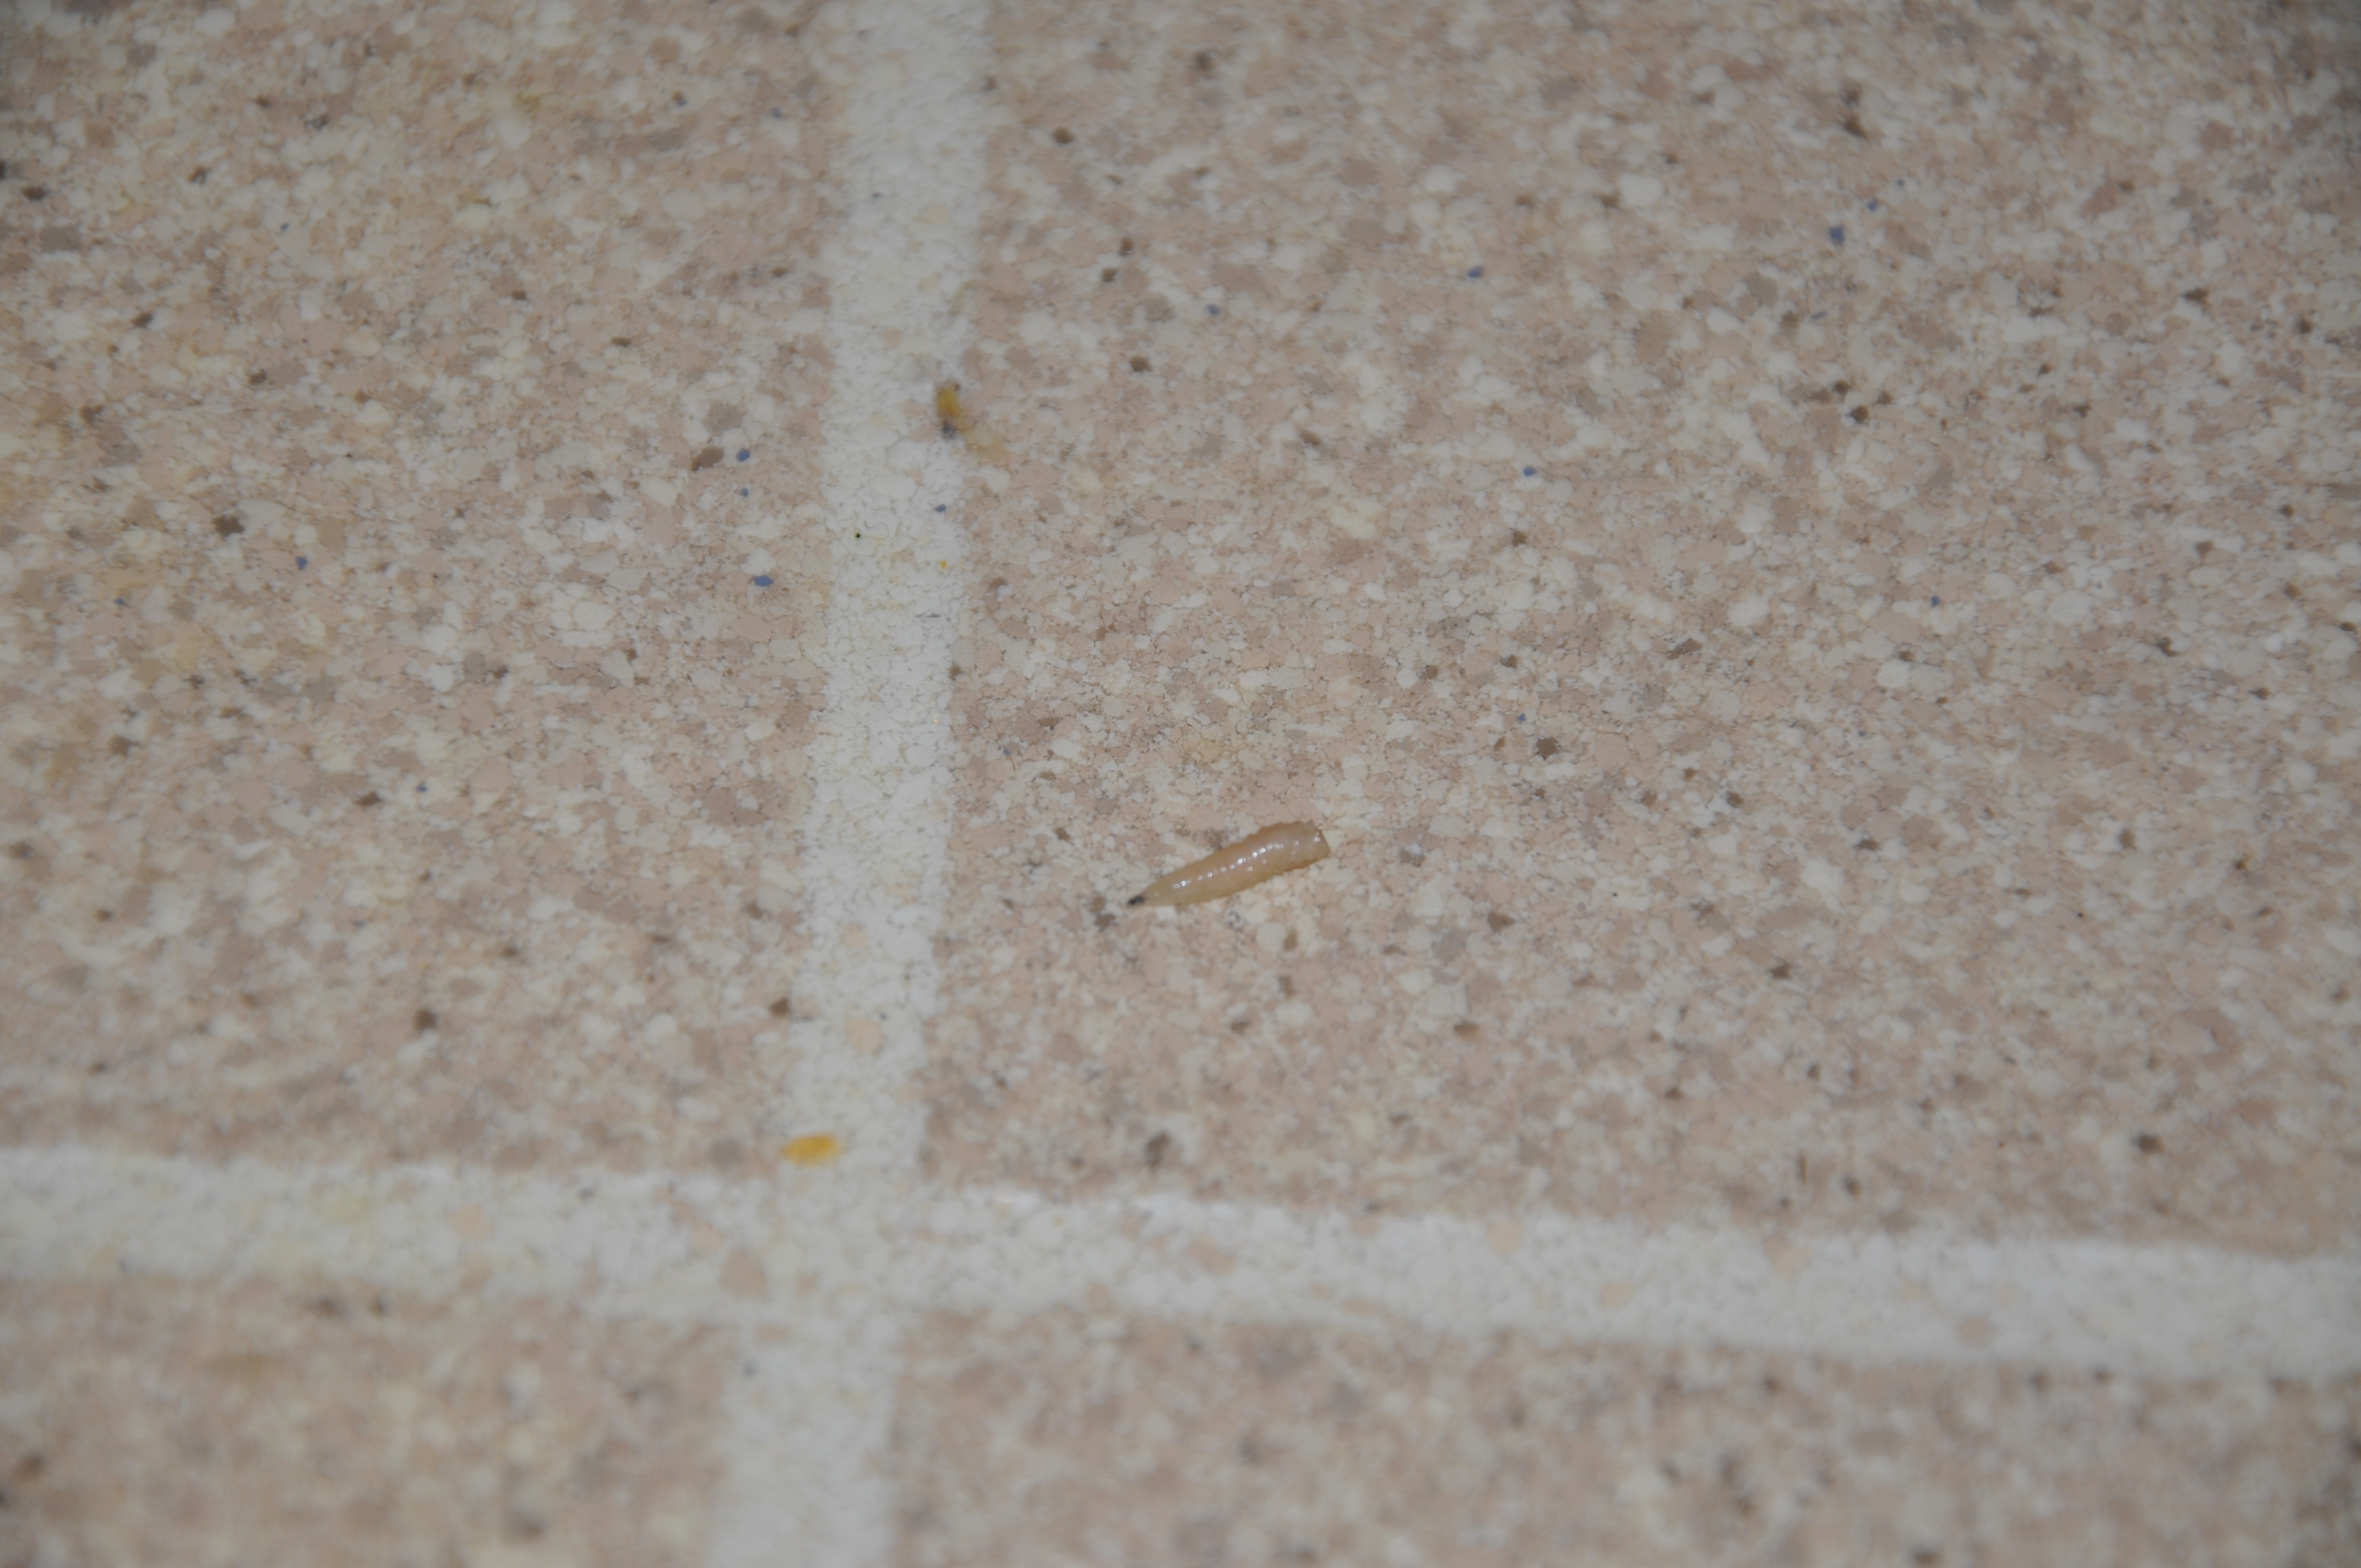 Maggots on Kitchen Floor - Ask Extension